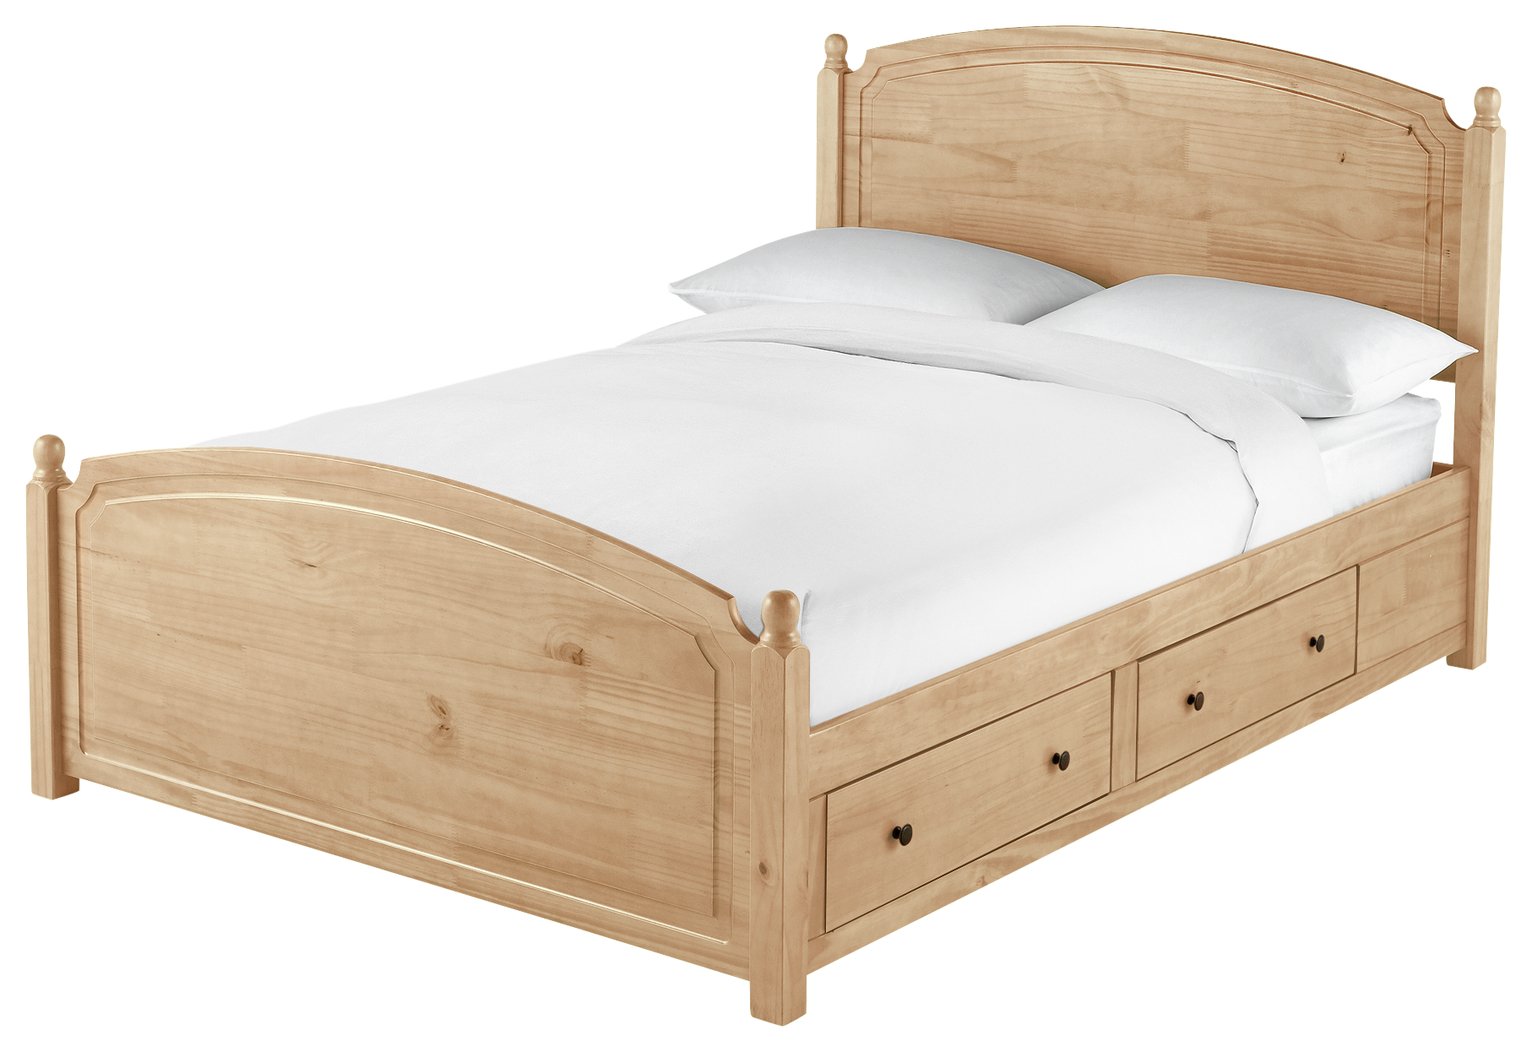 Argos Home Emberton Double Wooden Bed Frame - Pine